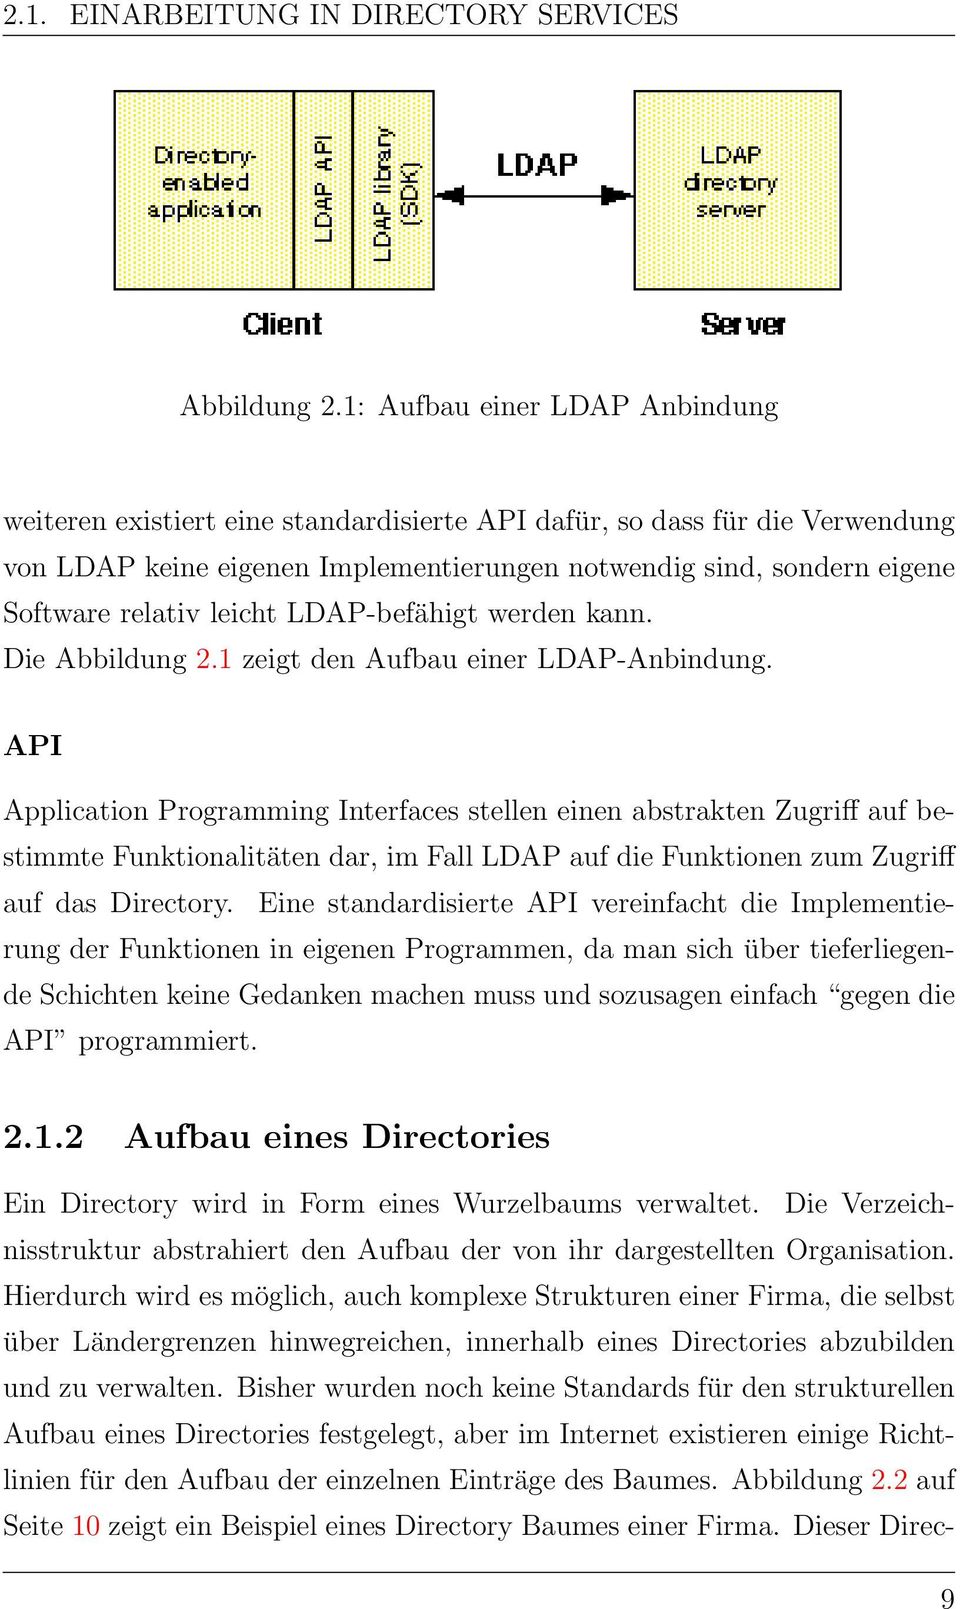 leicht LDAP-befähigt werden kann. Die Abbildung 2.1 zeigt den Aufbau einer LDAP-Anbindung.